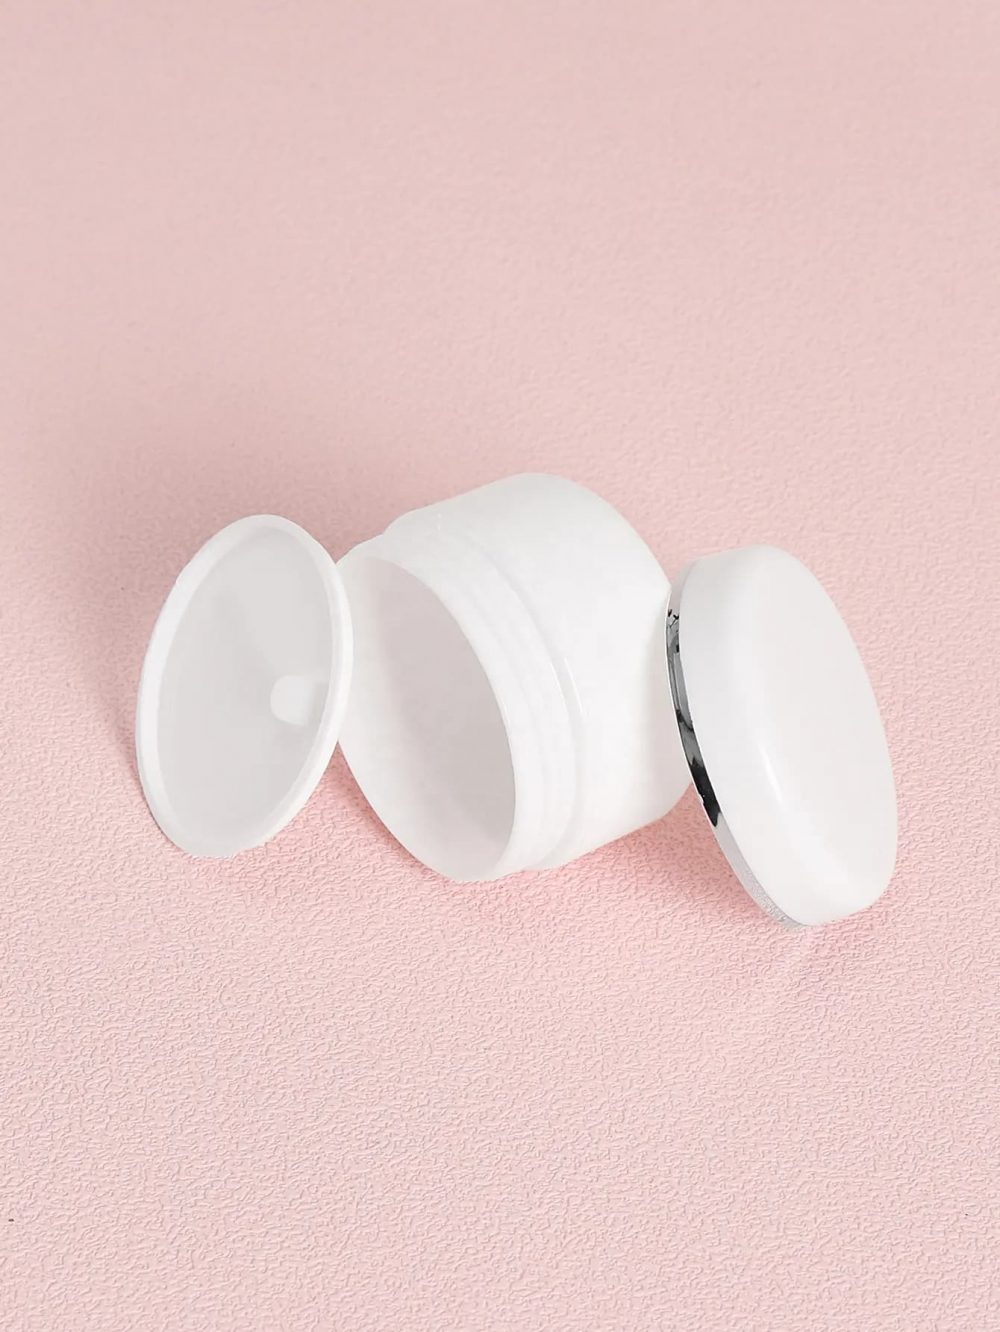 Body Scrub Jar Cosmetic Jars Plastic Personal Skin Care